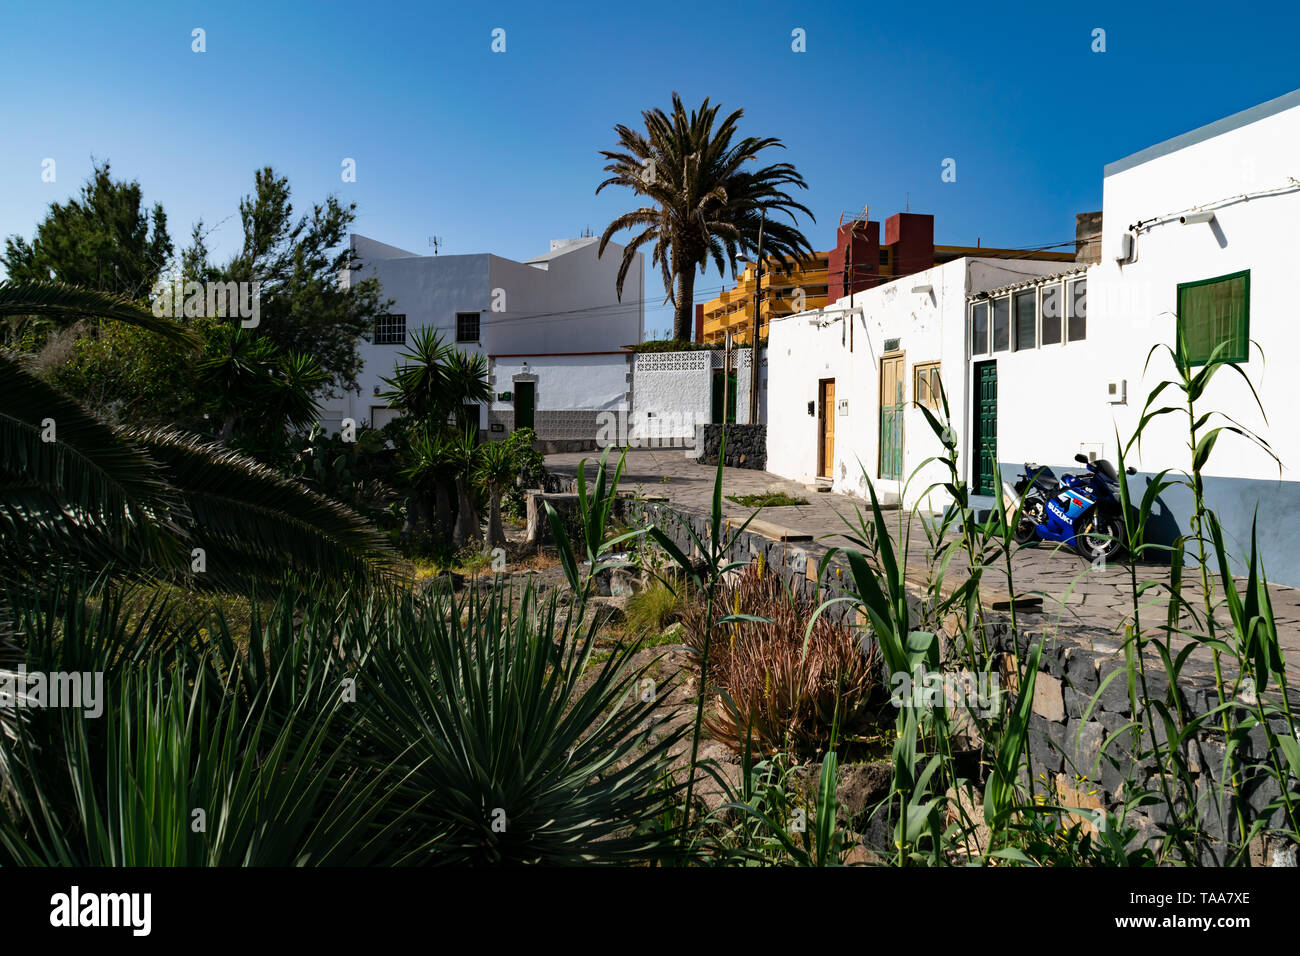 Impressions of El Poris de Abona, a beautiful village directly at the Atlantic ocean on the south coast of Tenerife, Canary Islands. Stock Photo